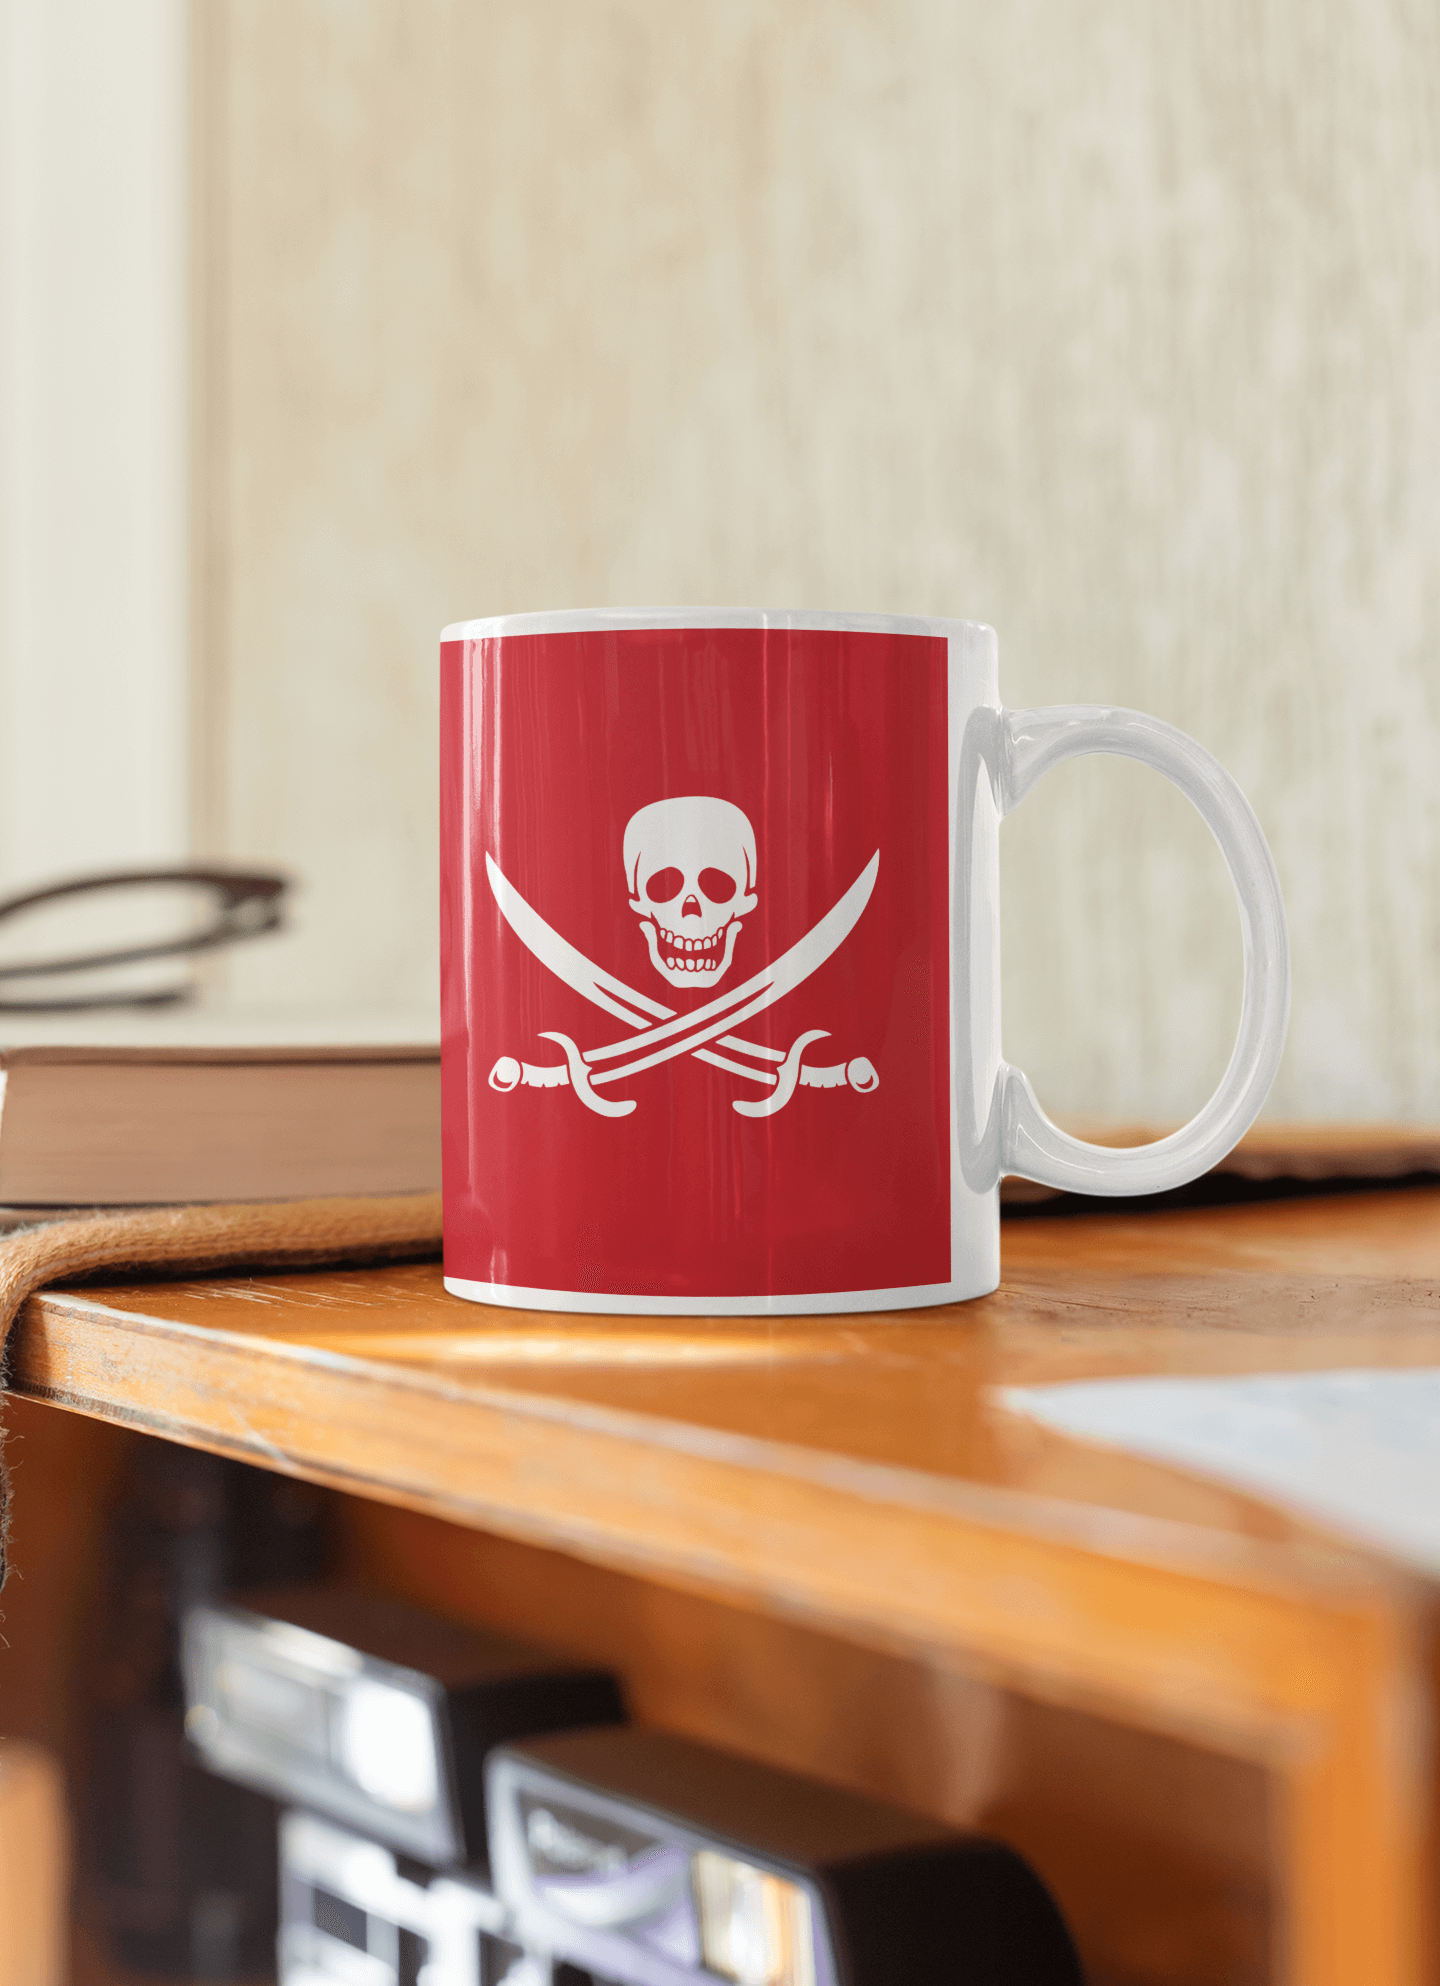 Pirate Mug - White glossy mug